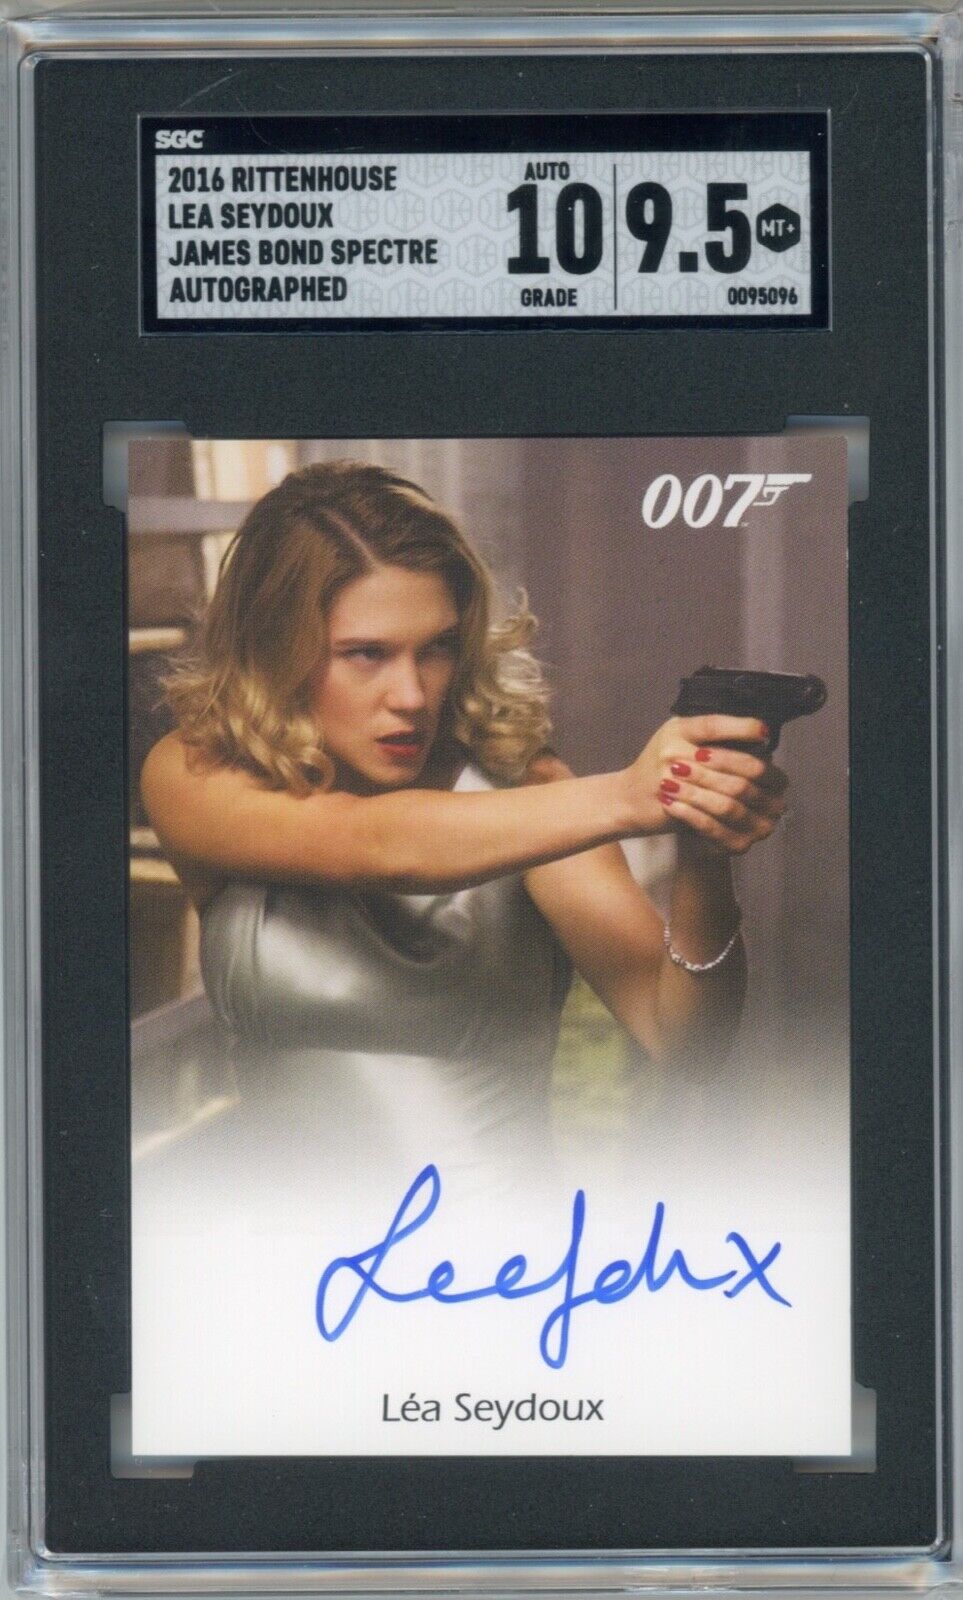 2016 Rittenhouse James Bond Archives Lea Seydoux Full Bleed Autograph SGC 9.5